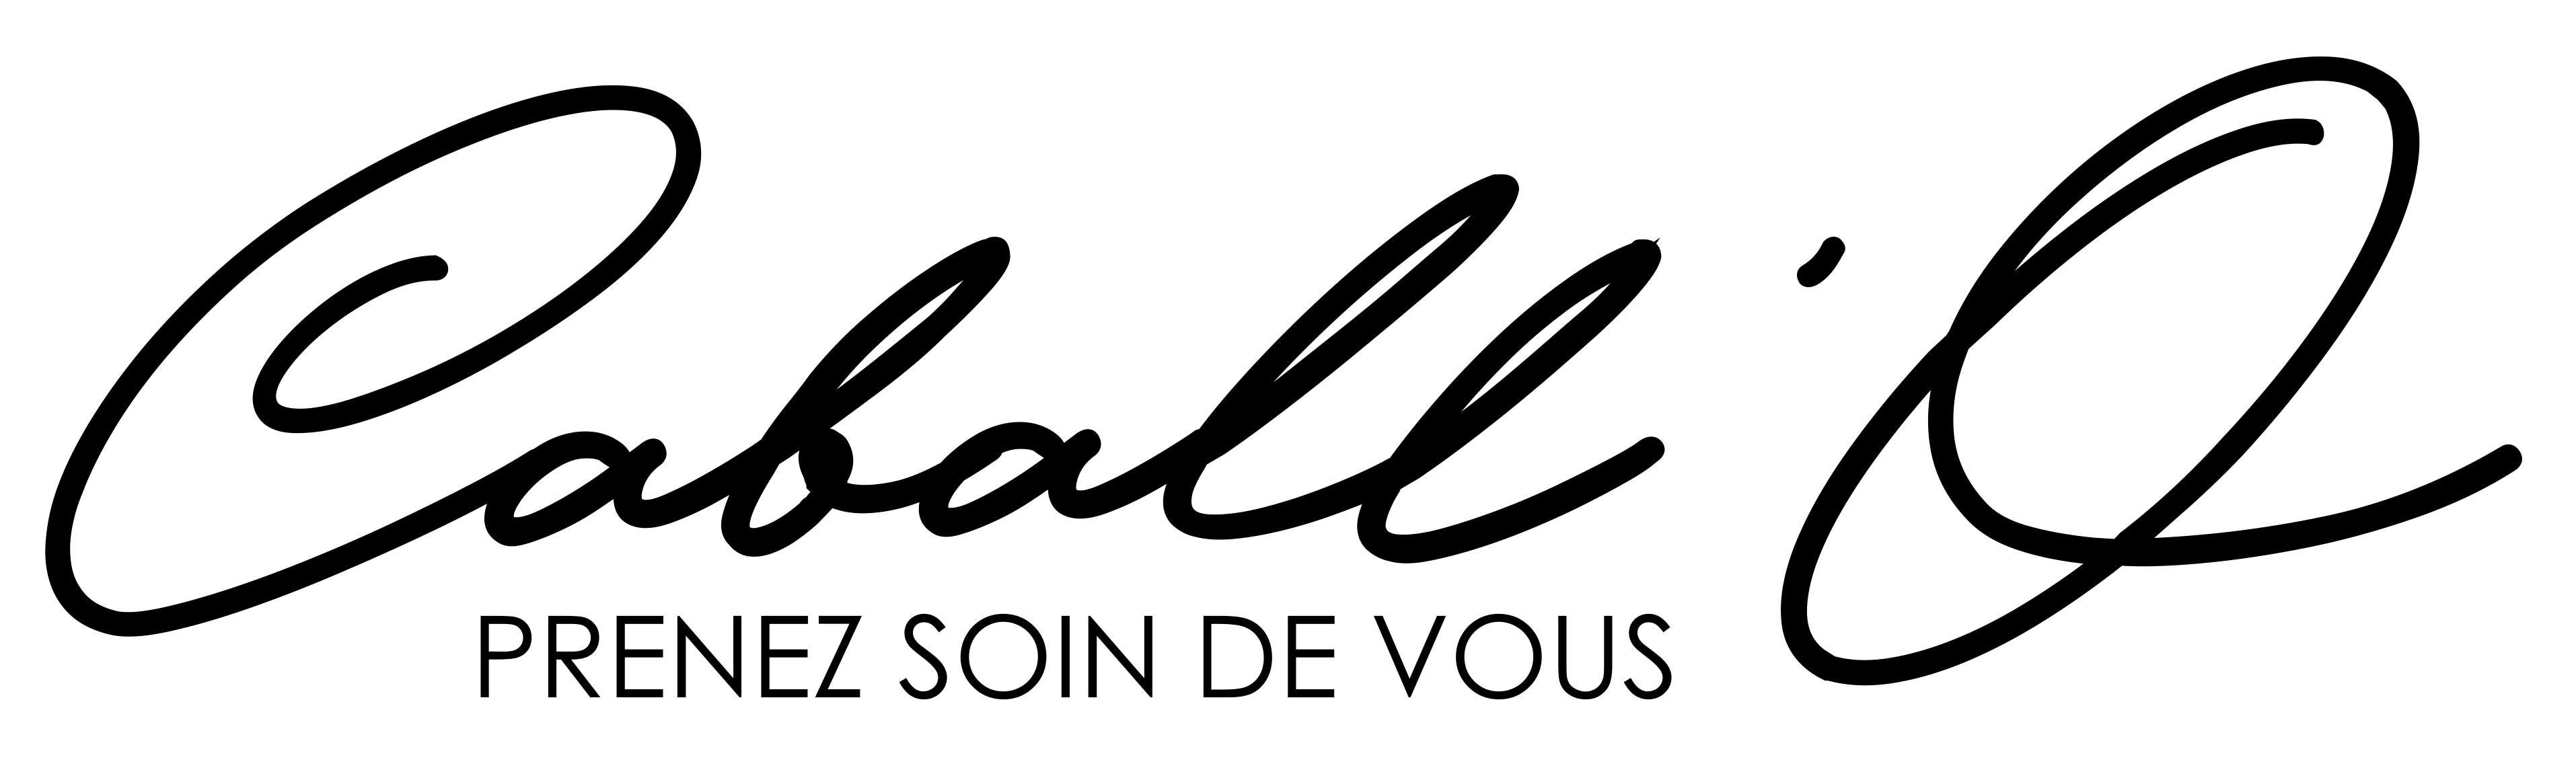 Logo Caball'O